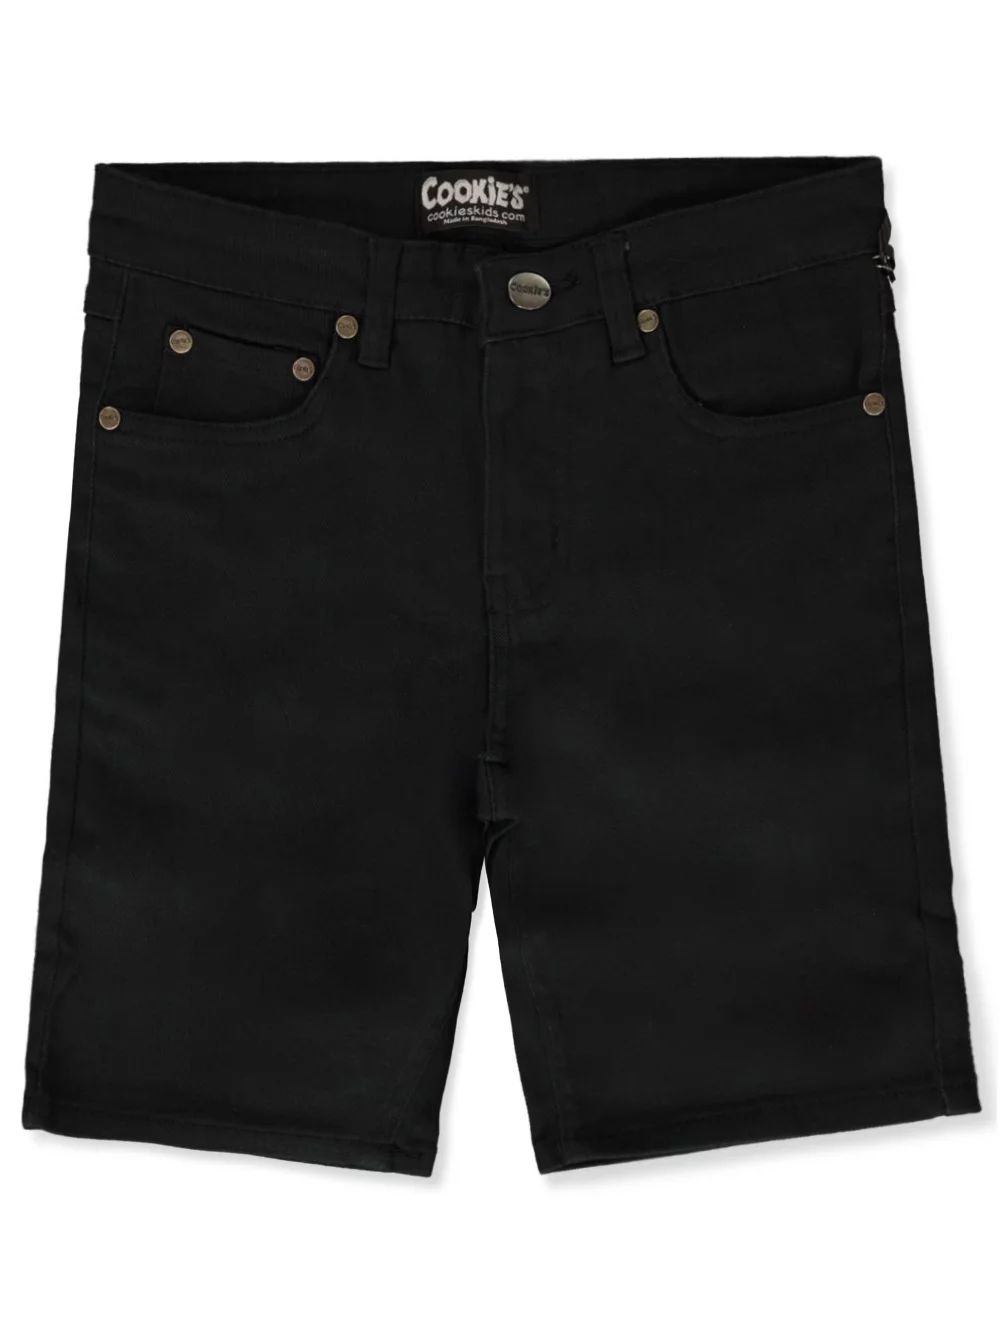 Cookie's Boys' Skinny Denim Shorts - black, 5 (Little Boys) | Walmart (US)